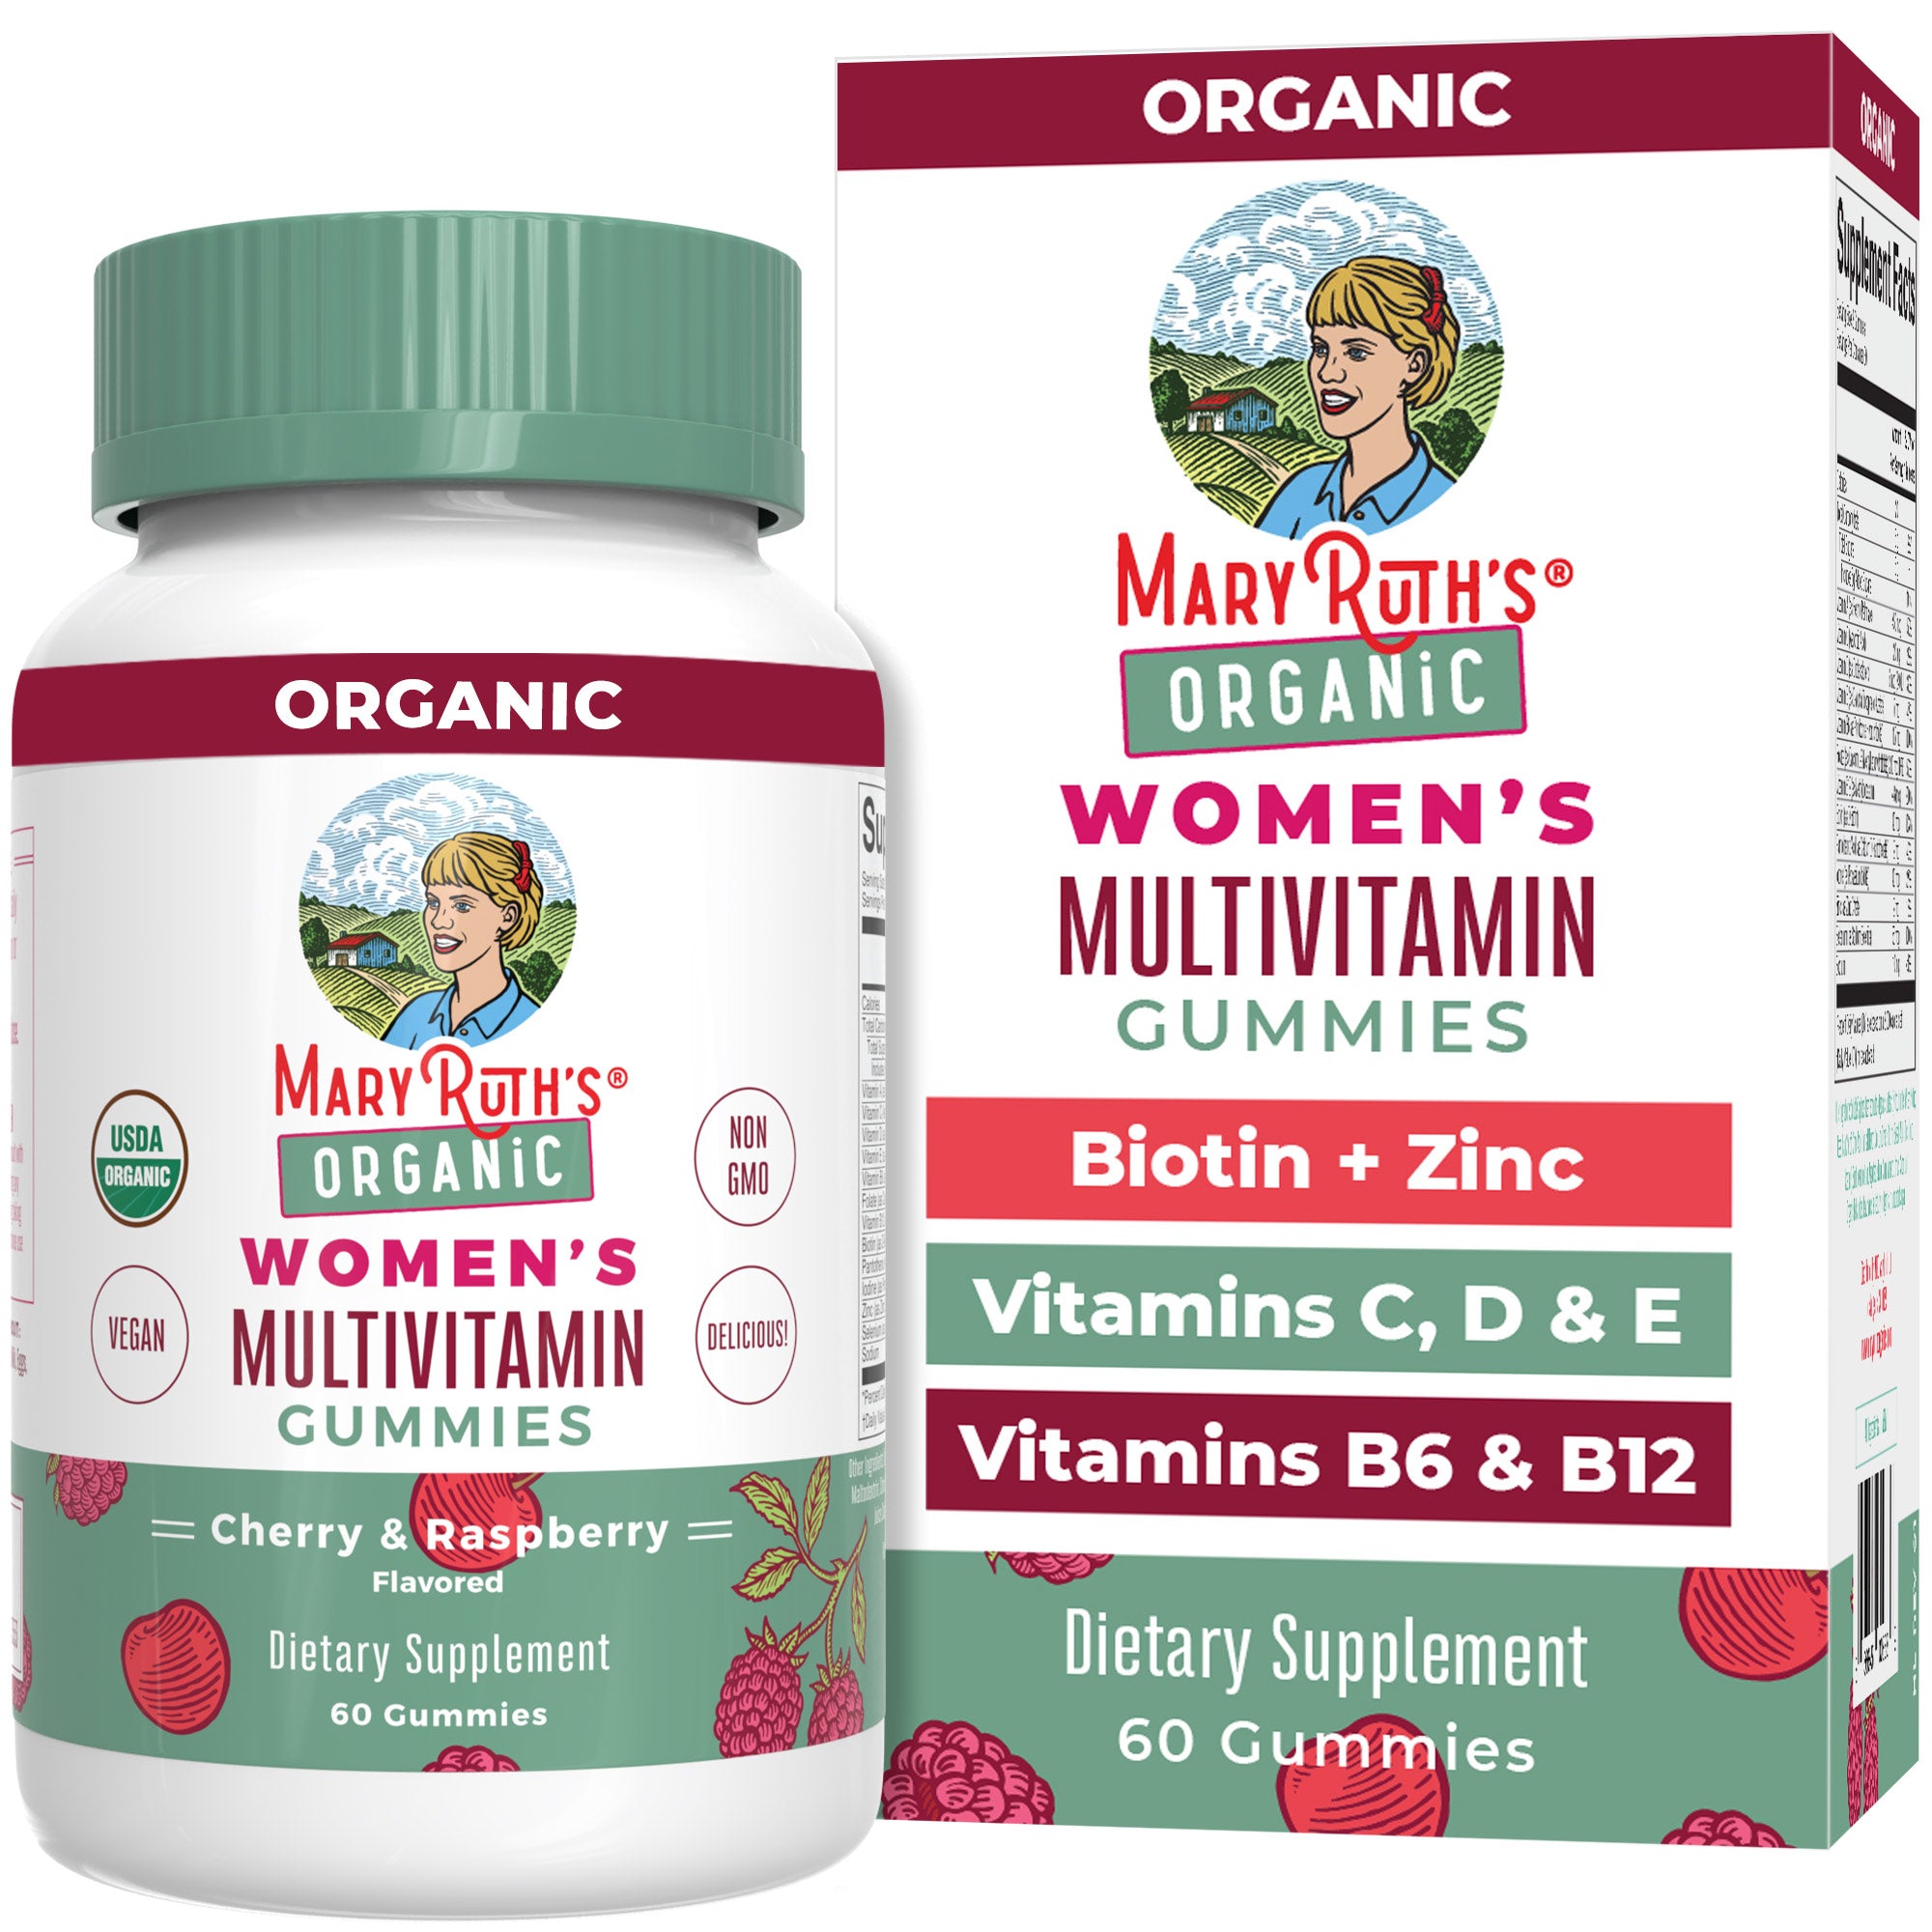 Organic Women's Multivitamin Gummies